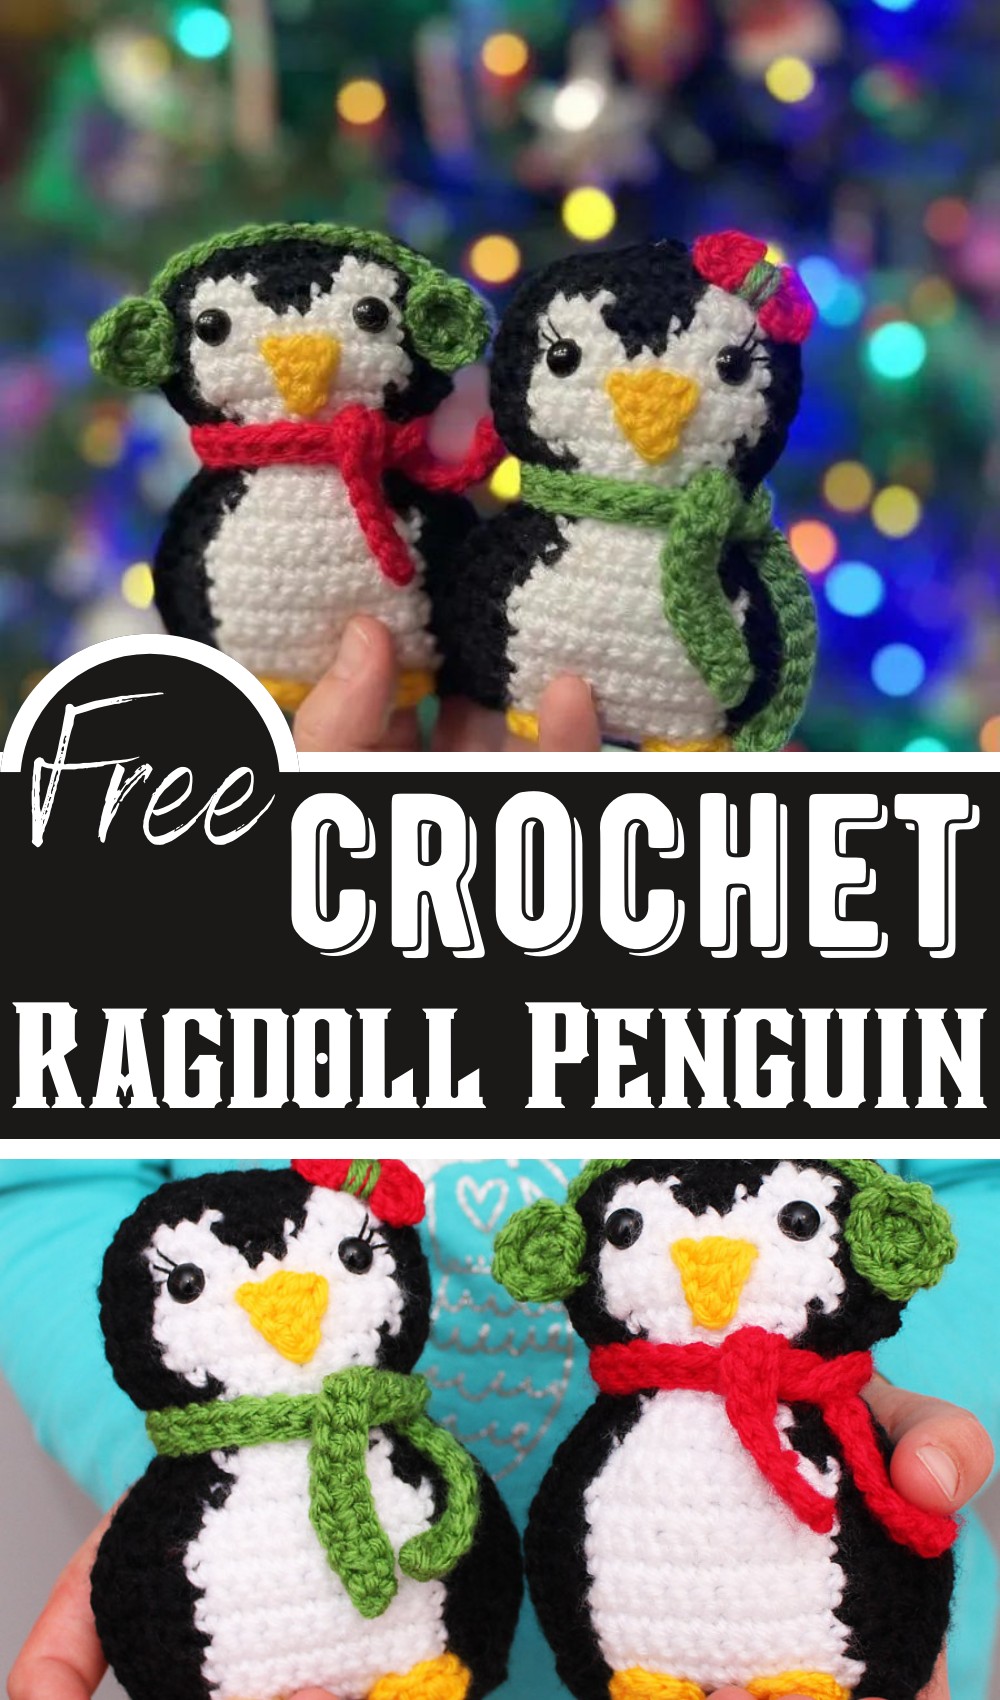 Ragdoll Penguin